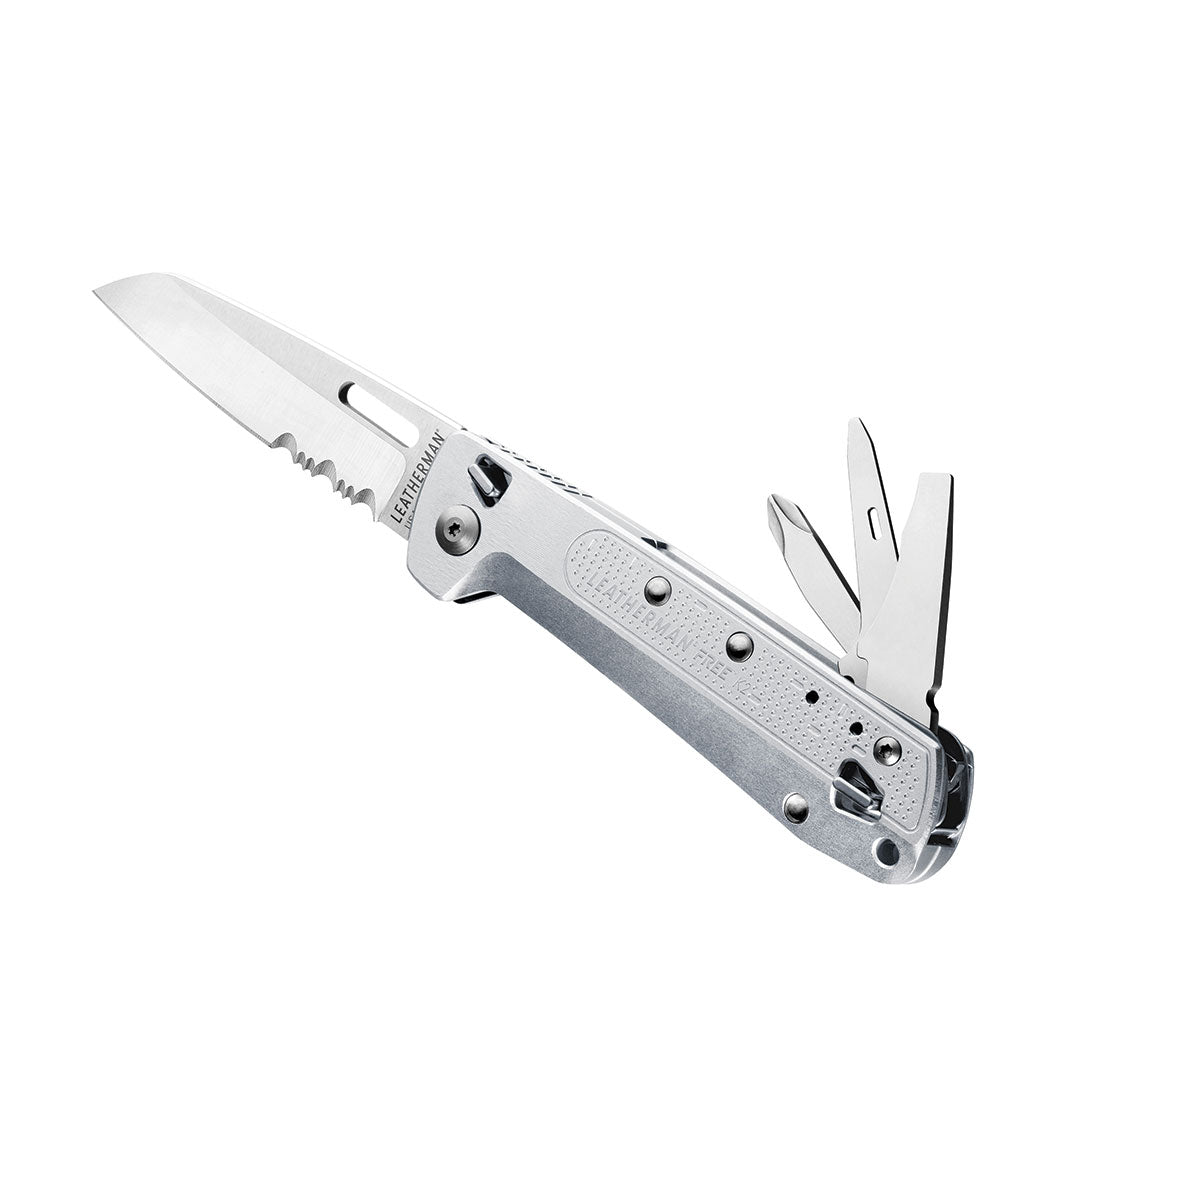 Leatherman | FREE™ K2X Pocket Knife